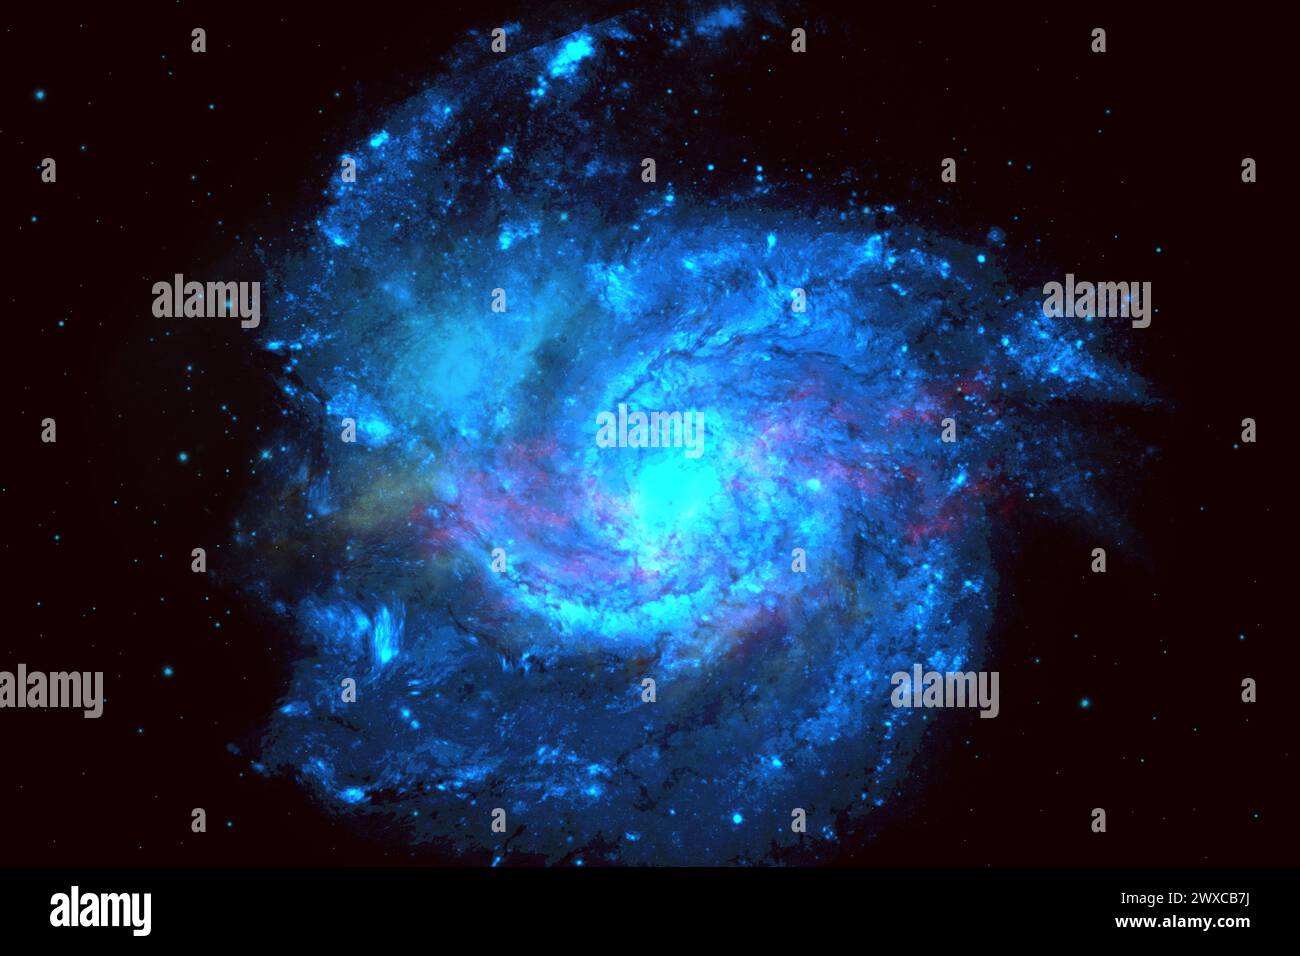 Space wallpaper showcasing a blue galaxy nebula. Stock Photo